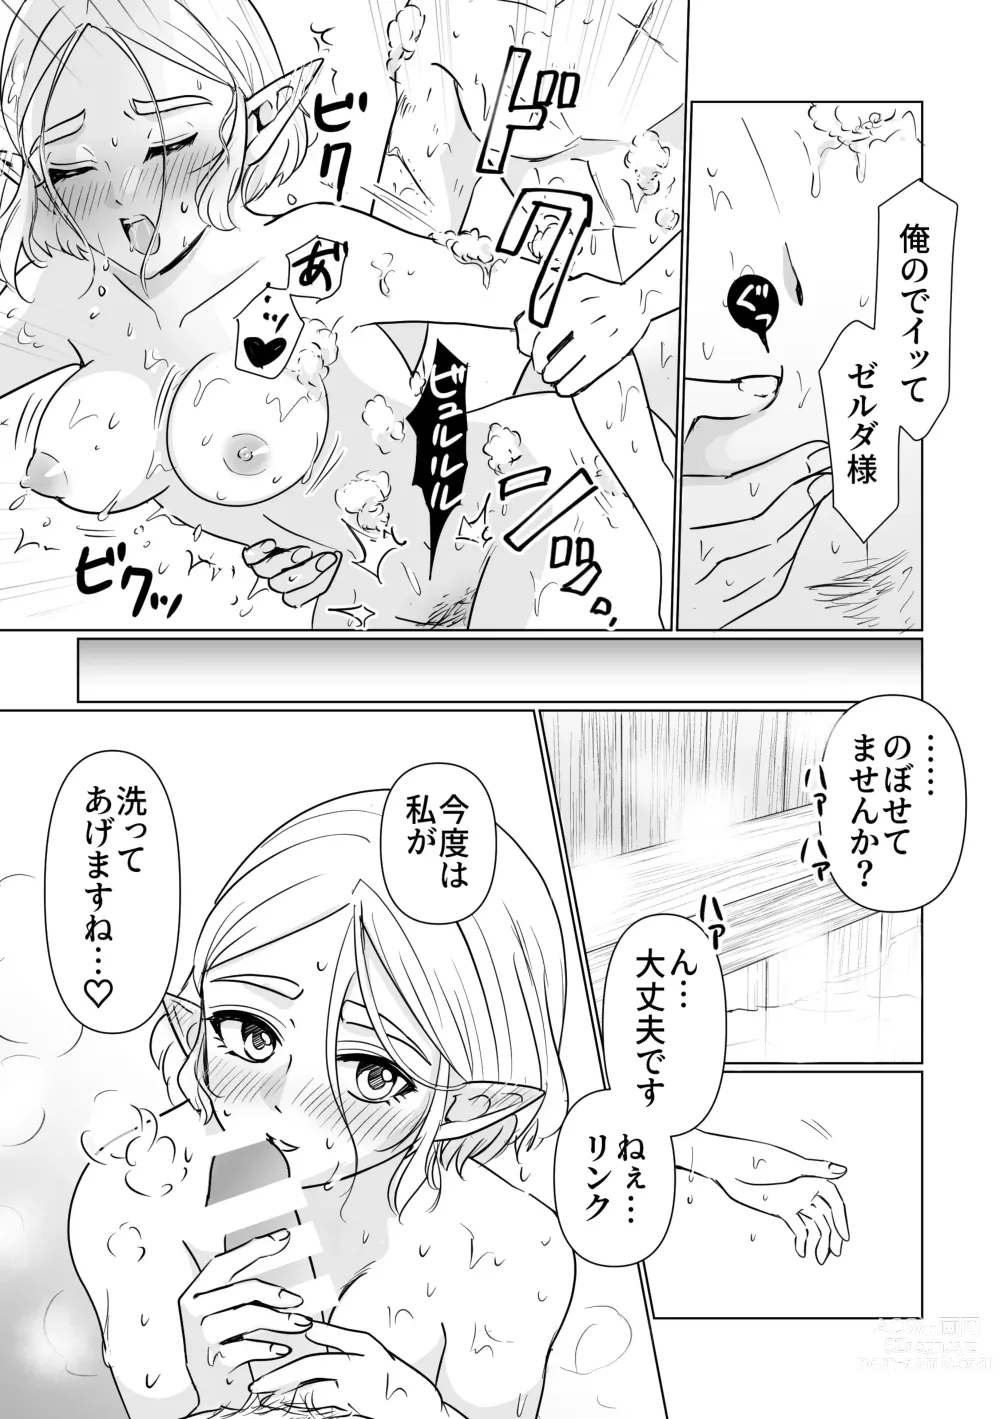 Page 9 of doujinshi Ofuro no Jikan